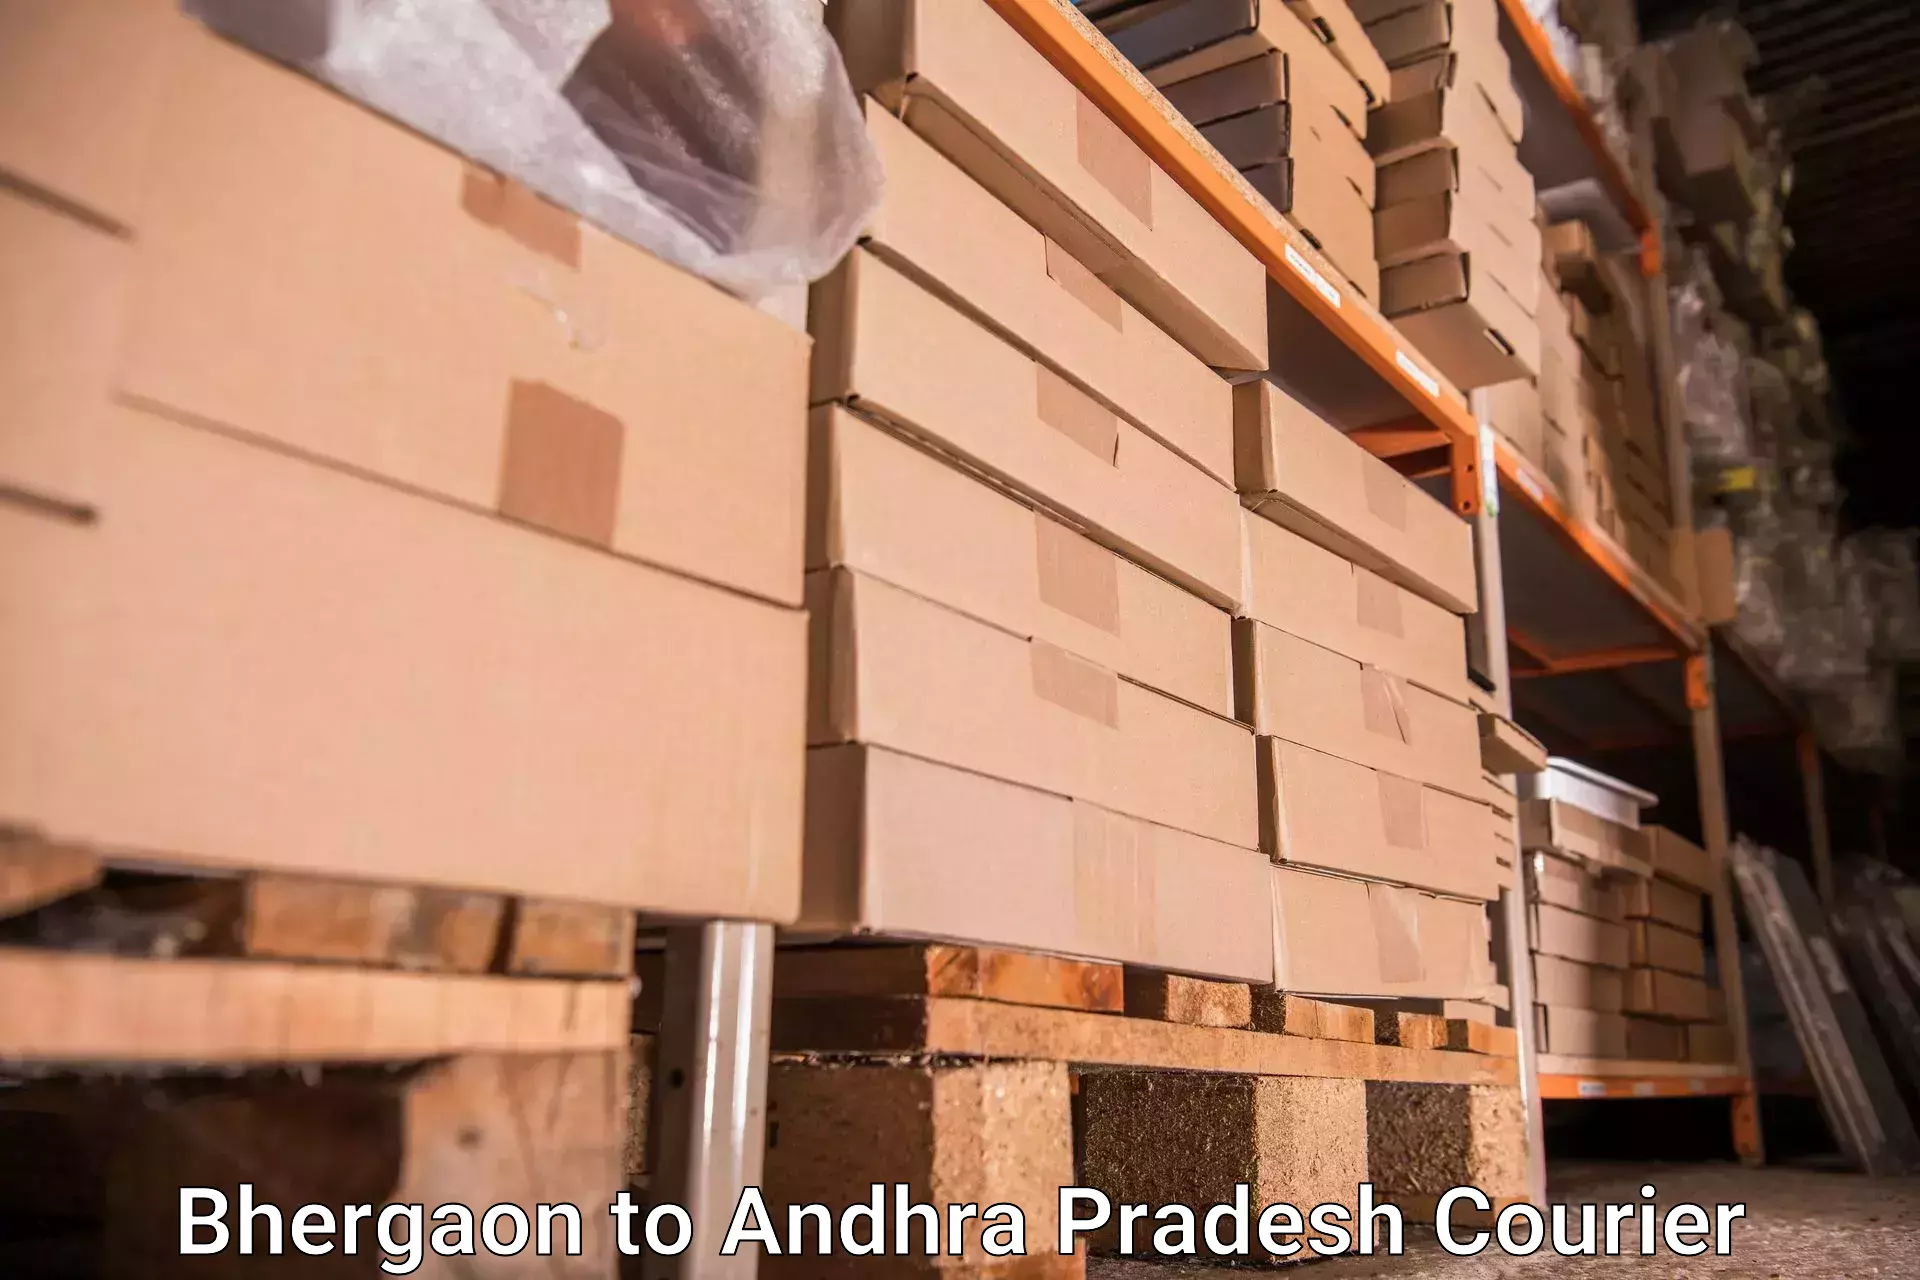 Baggage relocation service Bhergaon to Puttur Tirupati